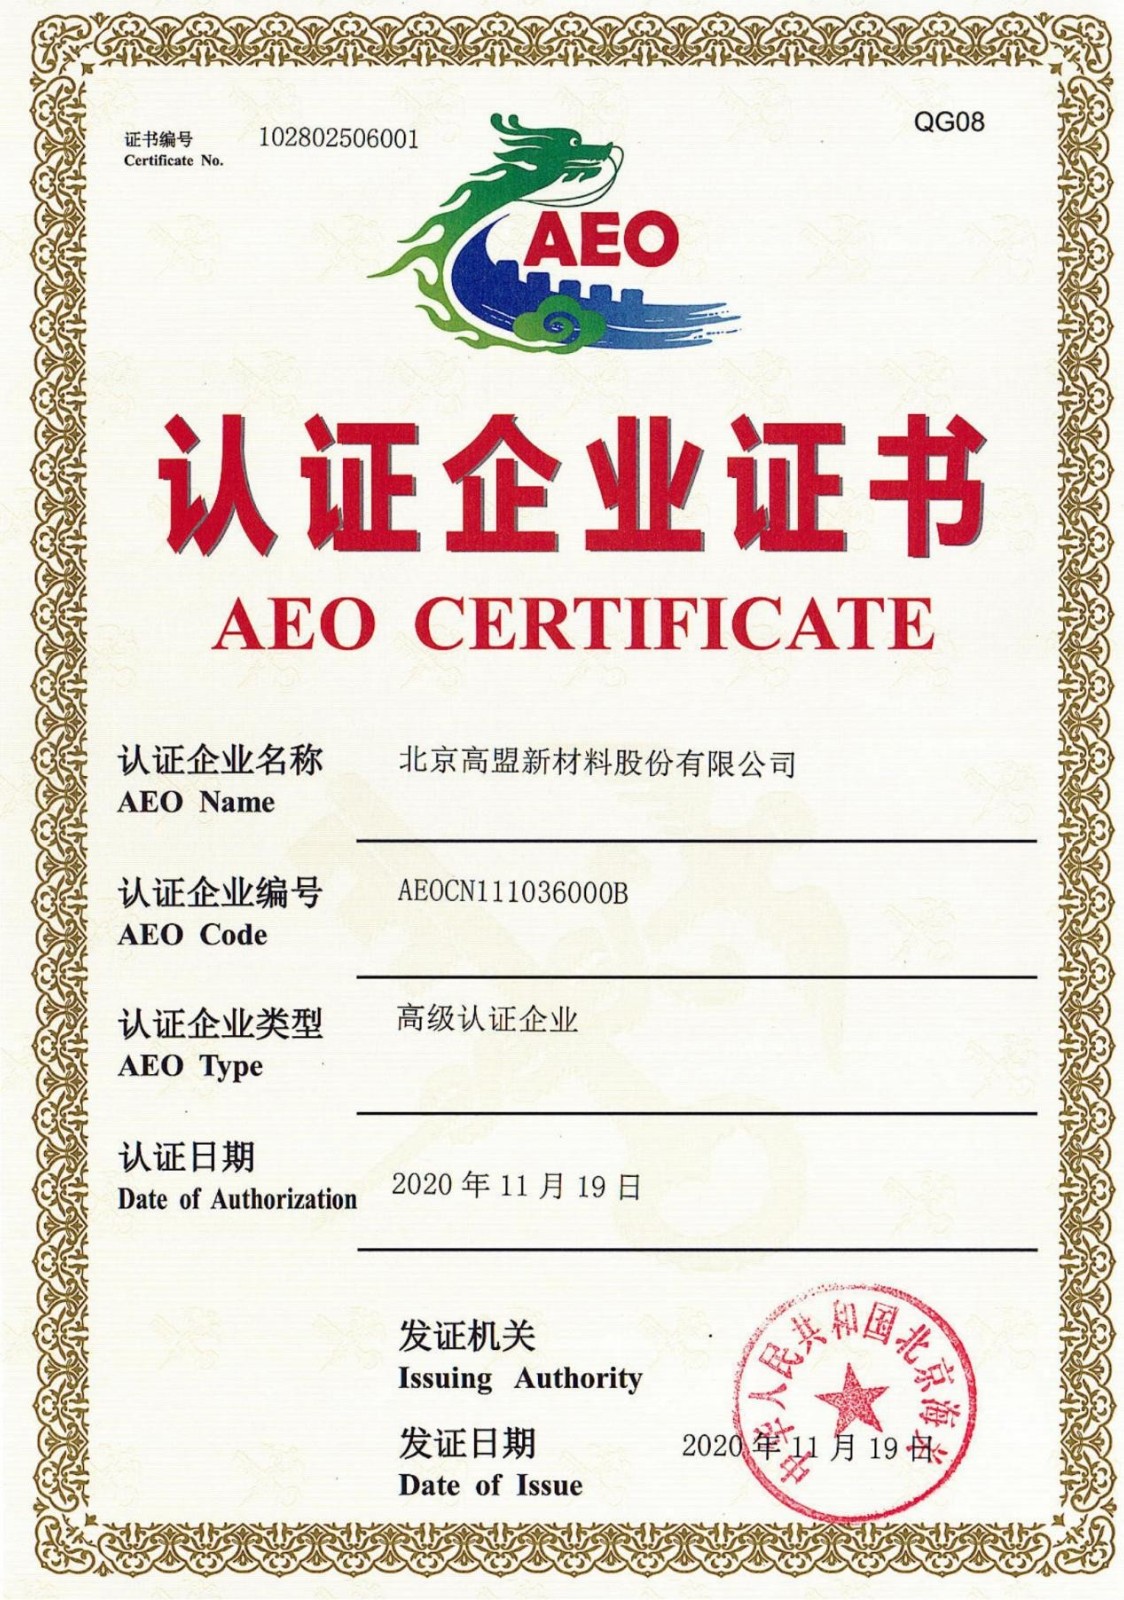 Comens becomes an AEO Senior Certification Enterprise